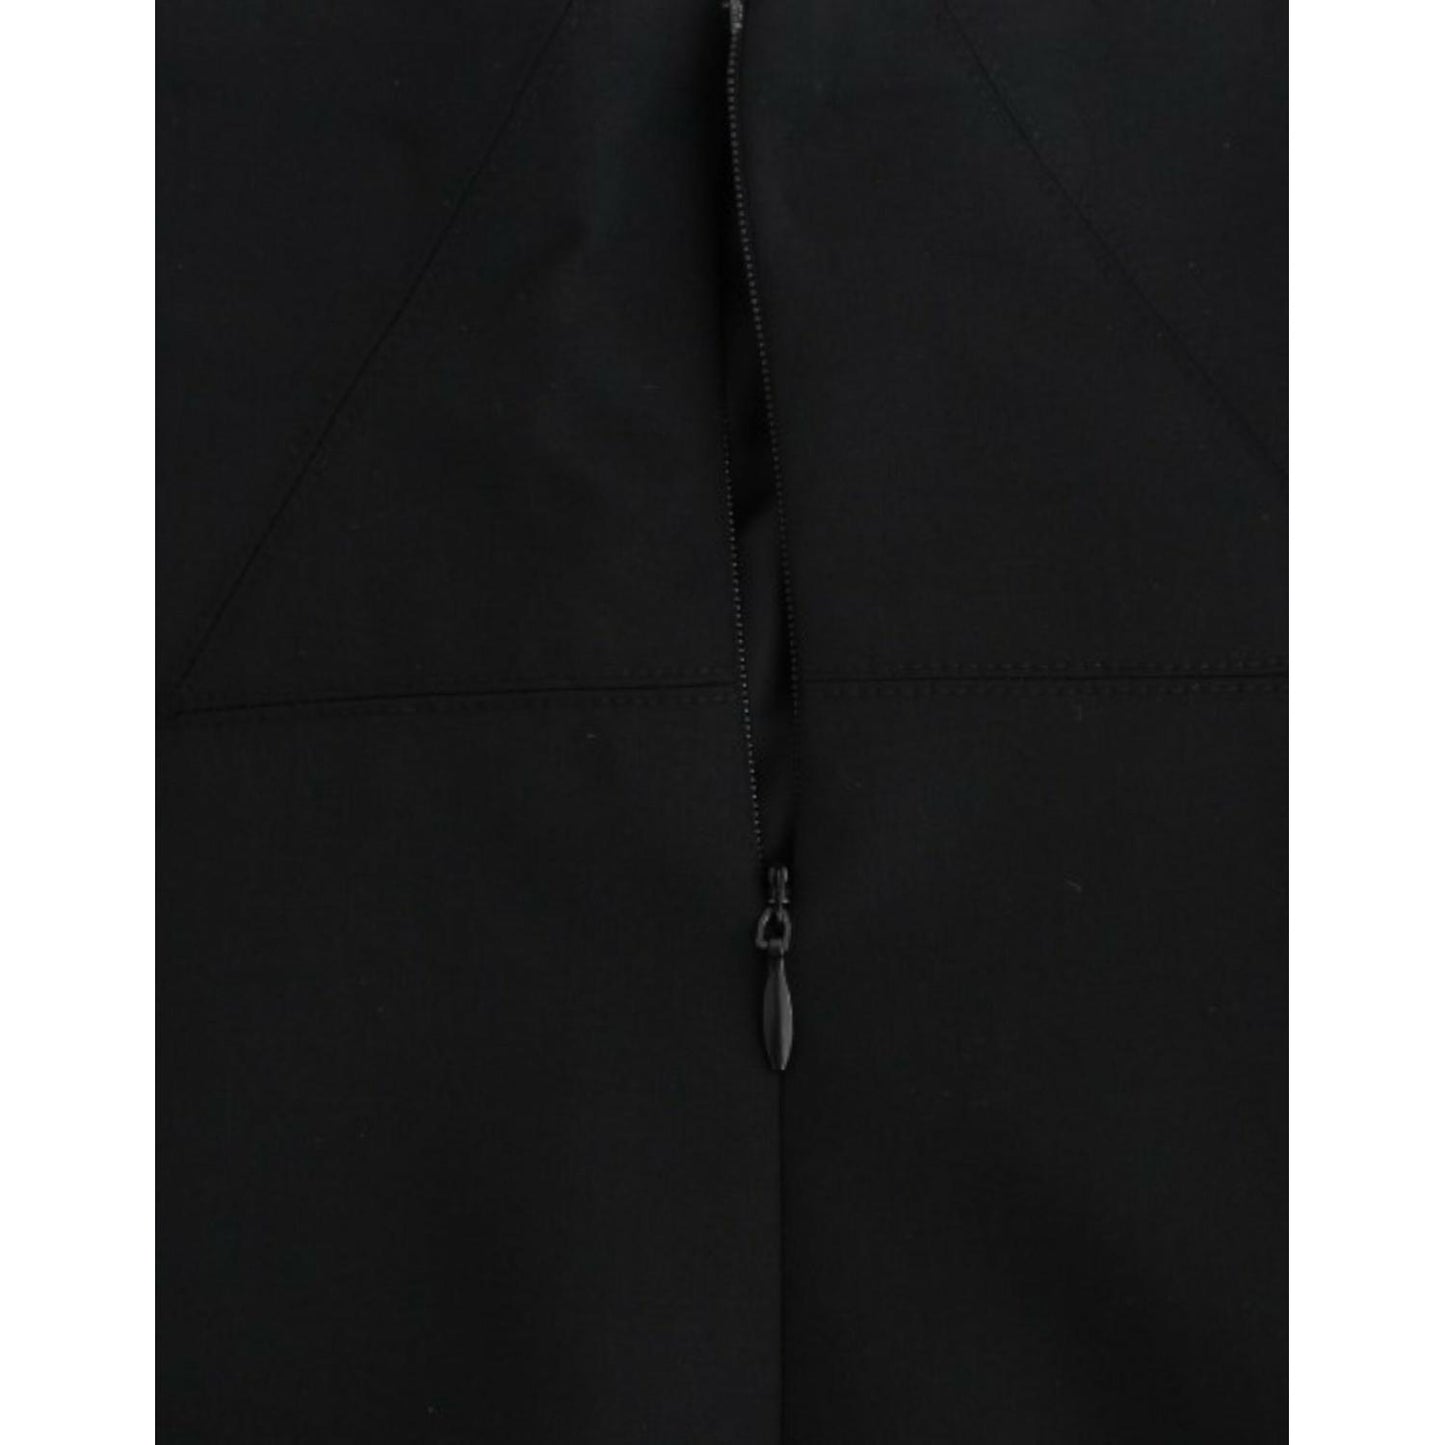 Cavalli Elegant Black Pleated Lace A-Line Skirt black-pleated-laced-skirt 9831-black-pleated-laced-skirt-4-scaled-8a846862-2aa.jpg